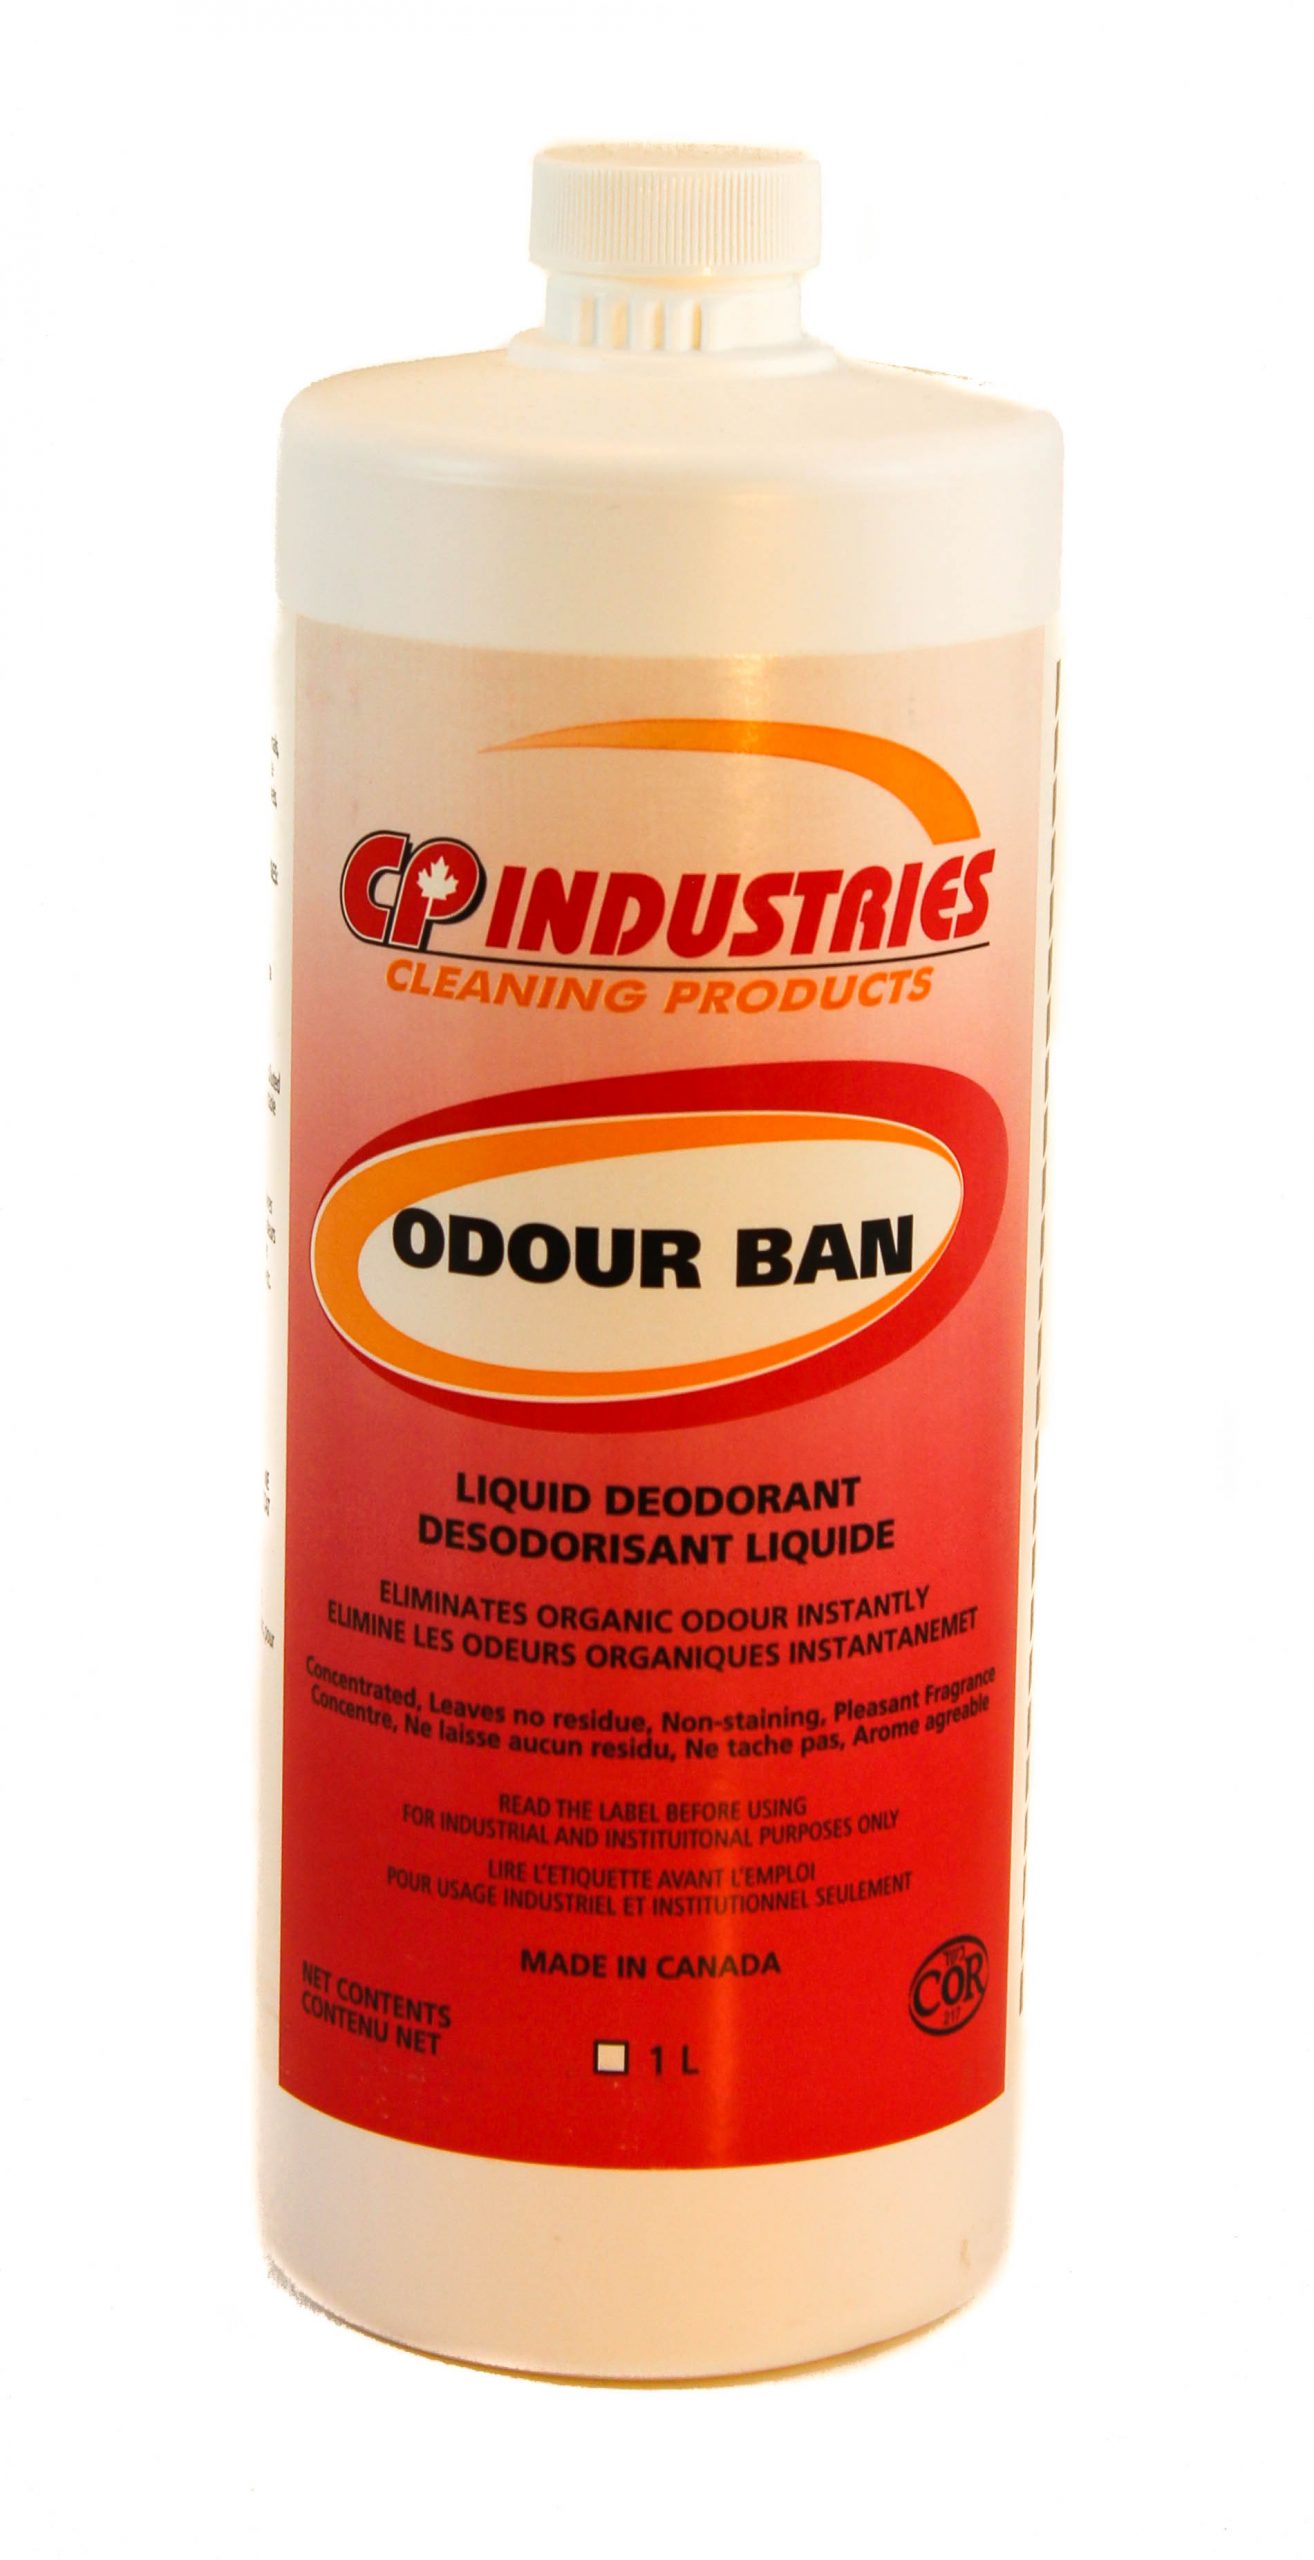 CP Industries Odour Ban 1L Liquid Deodorant